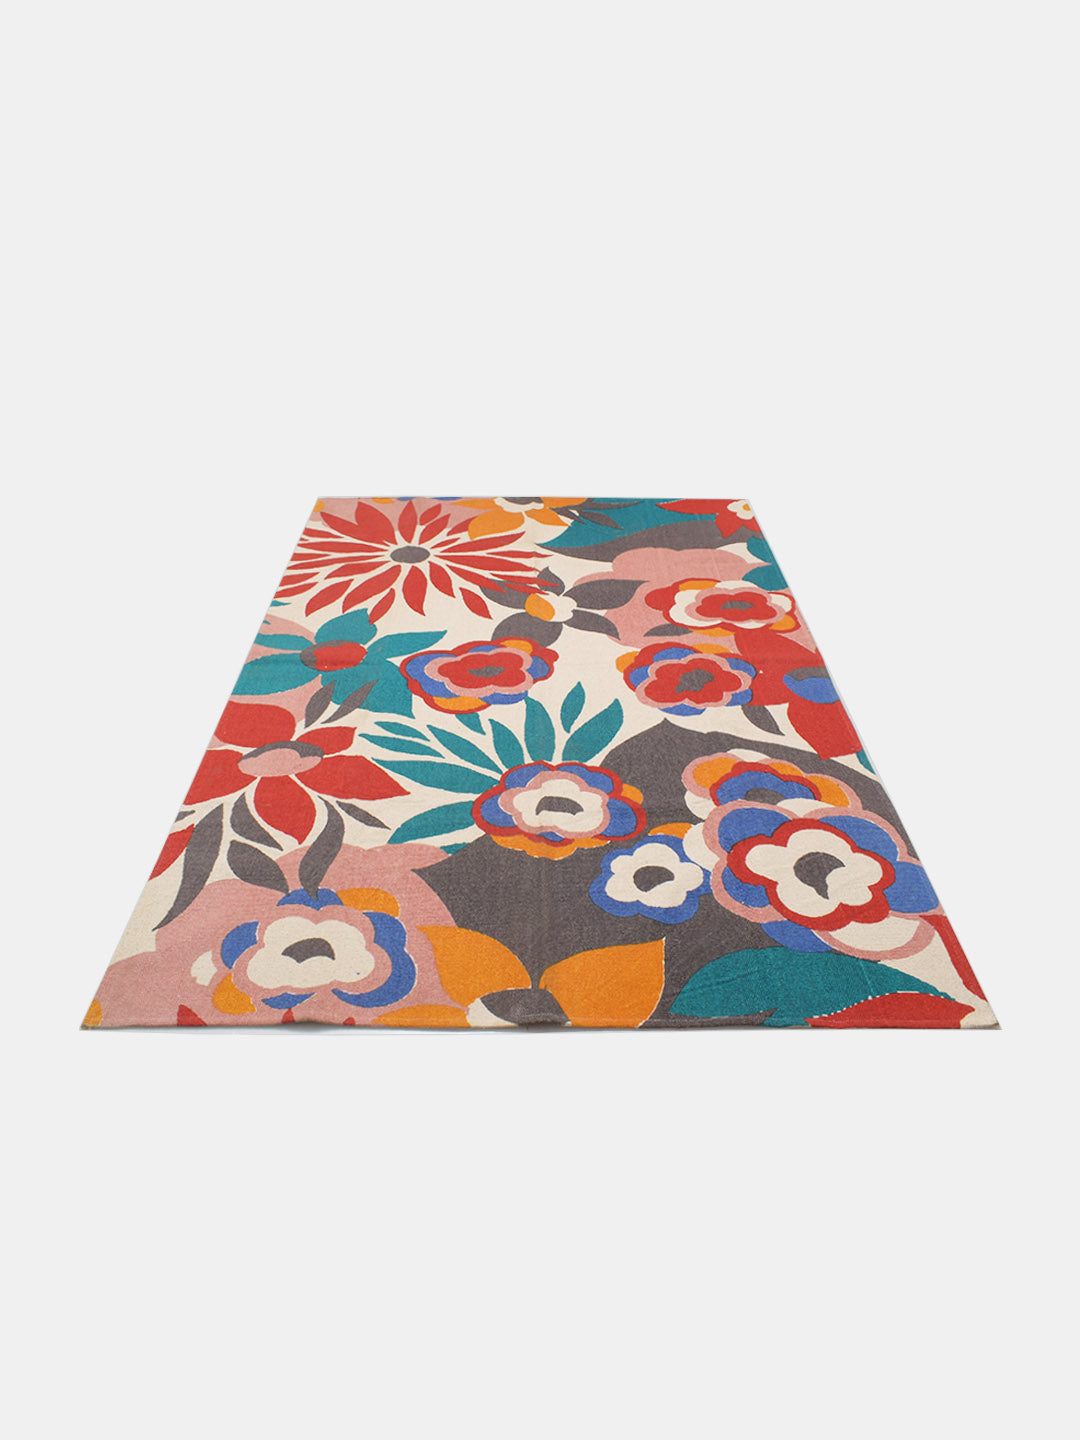 Blanc9 Floral Printed "4x5.5 ft." Cotton Carpet